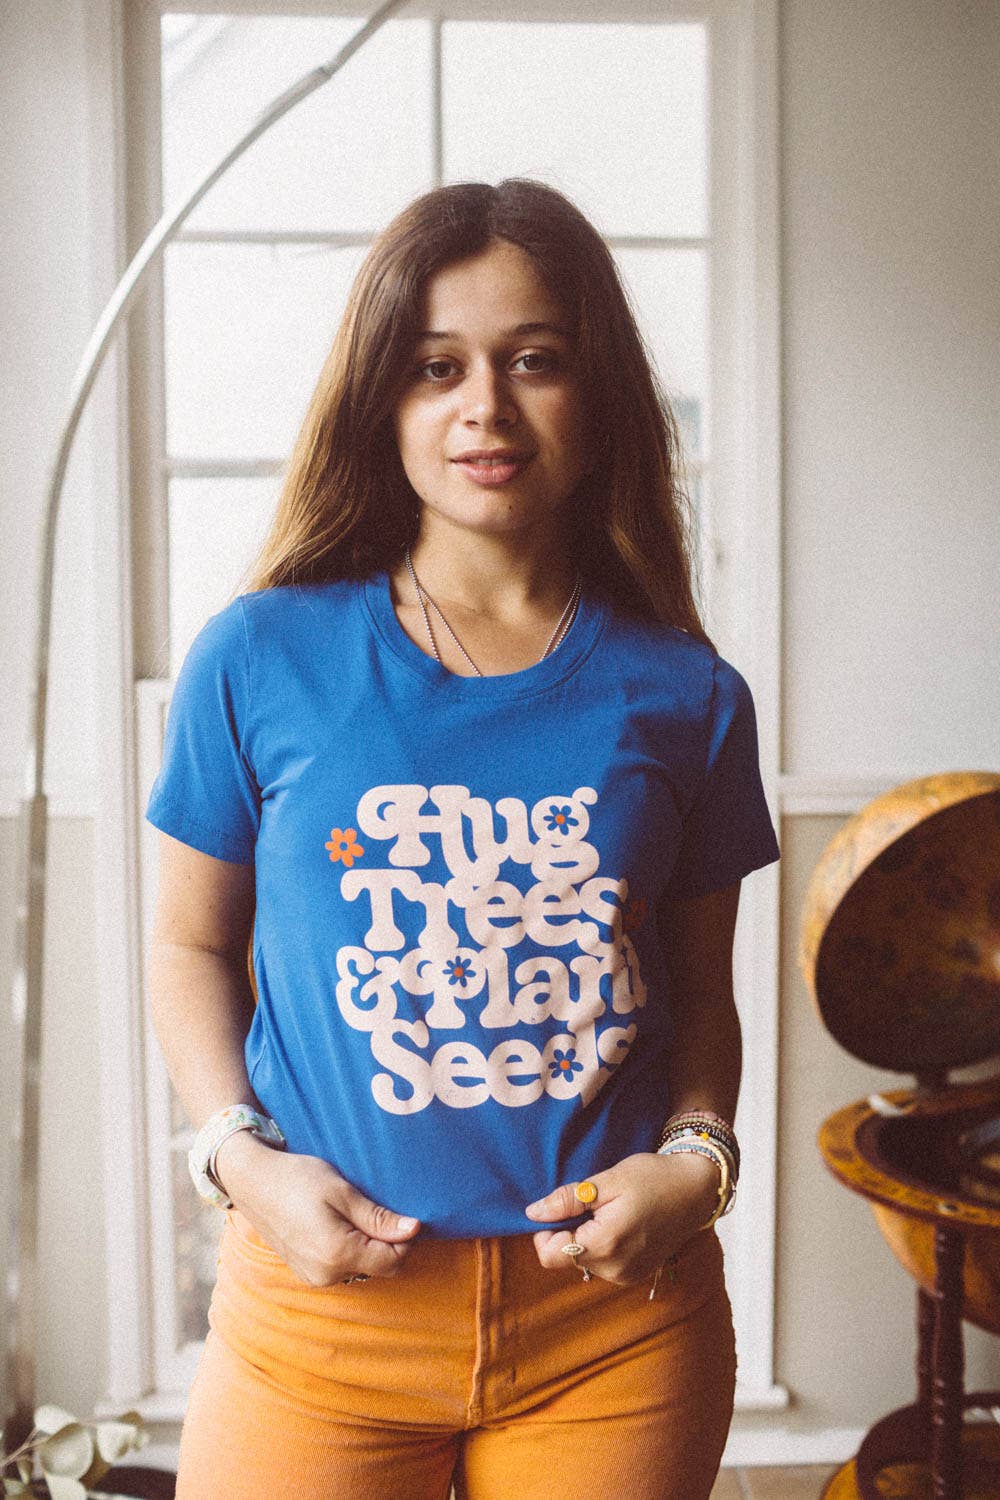 Hug Trees & Plant Seeds: Women's Fitted Crewneck Tee Shirt